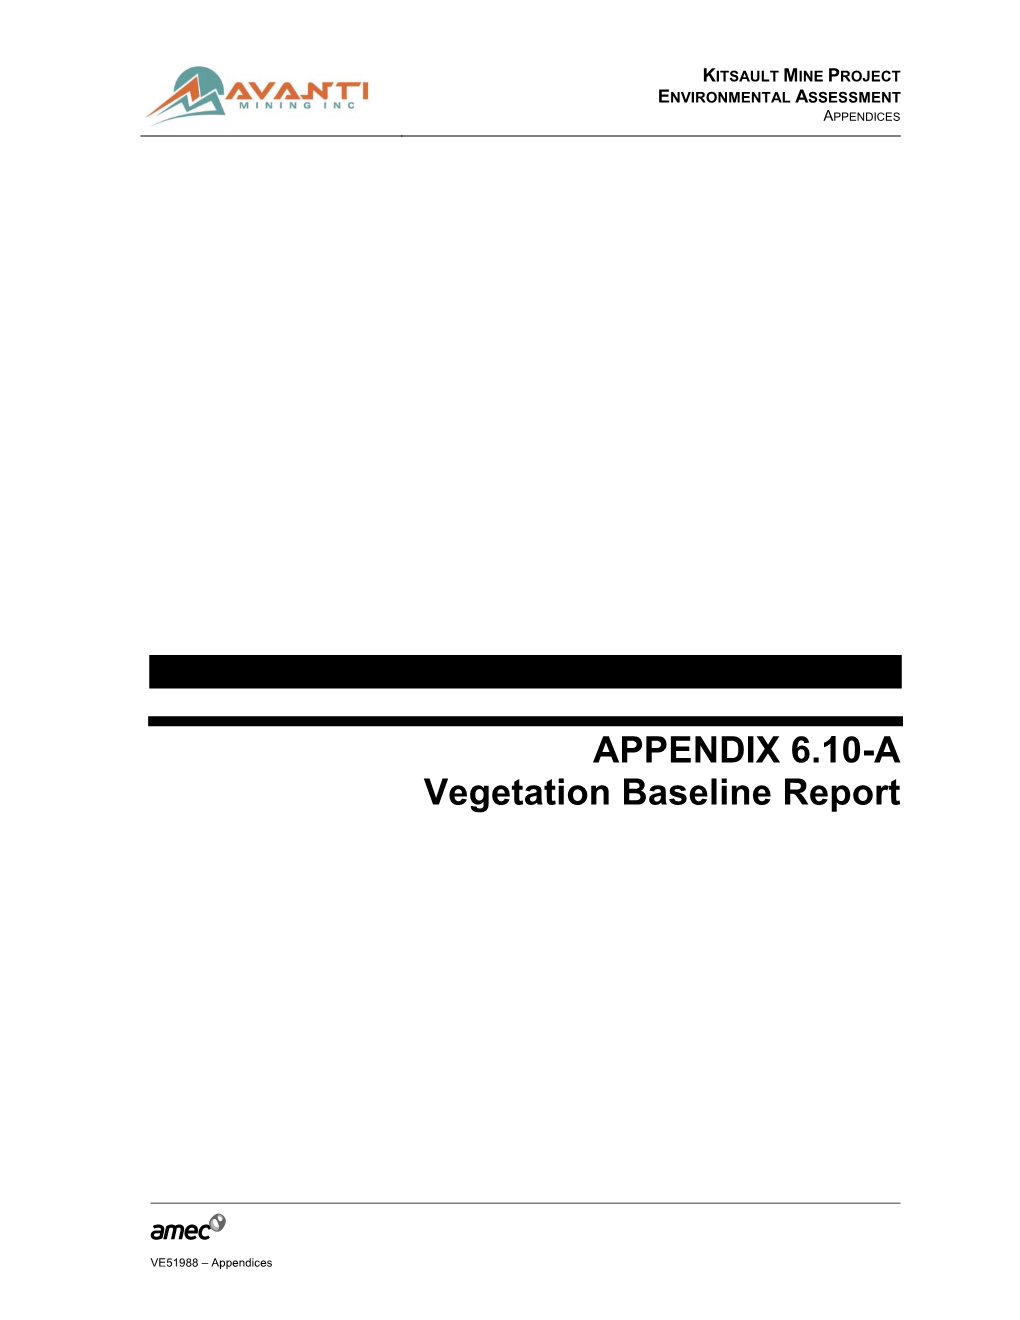 APPENDIX 6.10-A Vegetation Baseline Report